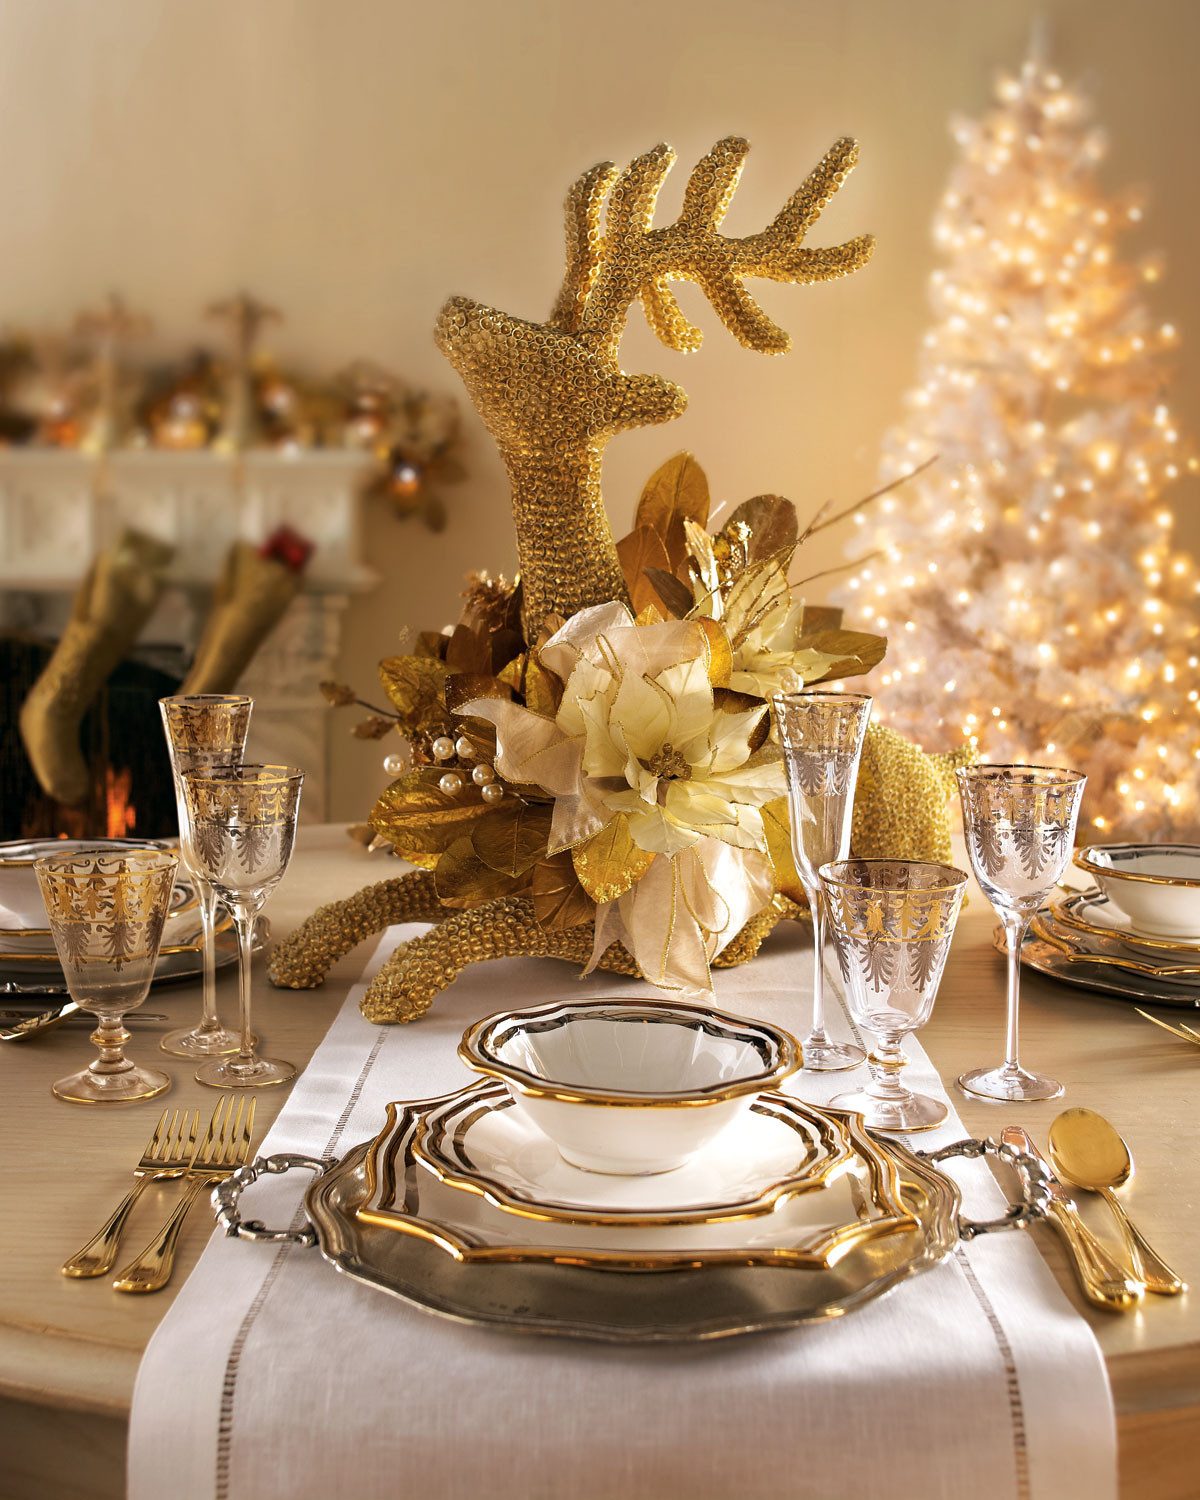 Christmas Table Settings
 A Golden Xmas